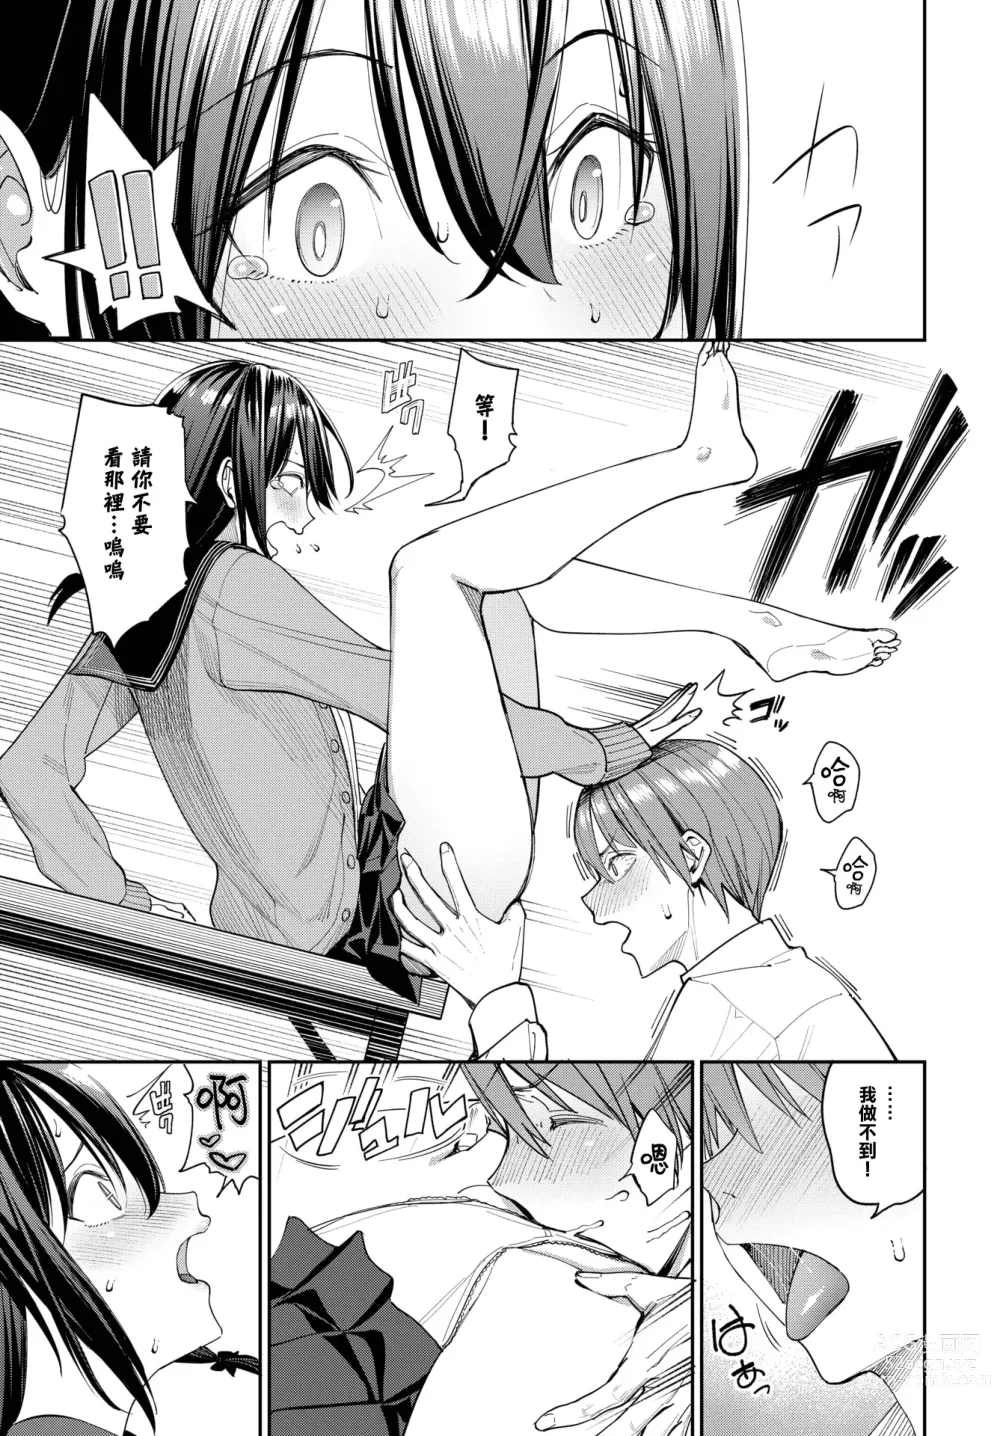 Page 9 of manga Riko no Hatsujou Chuuihou! - Im in heat so much. I can't take it...